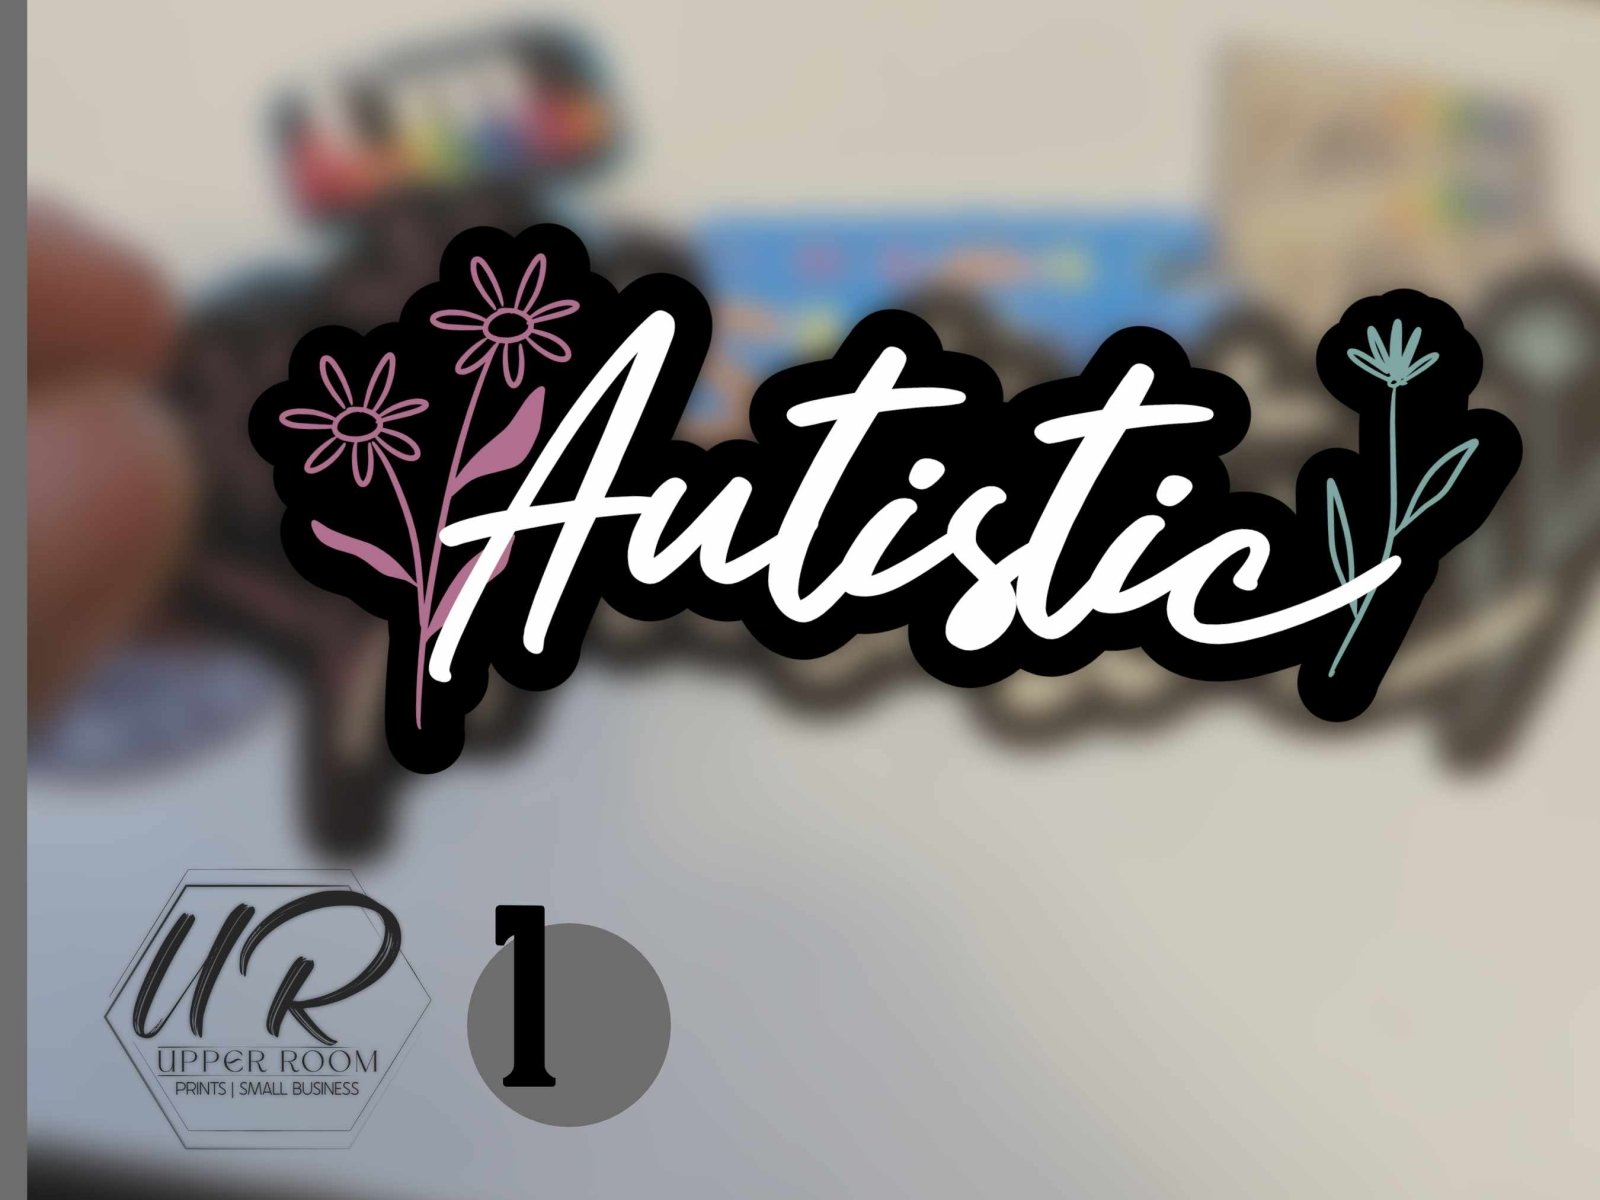 I'm Autistic Sticker - Stickers - UpperRoomPrints